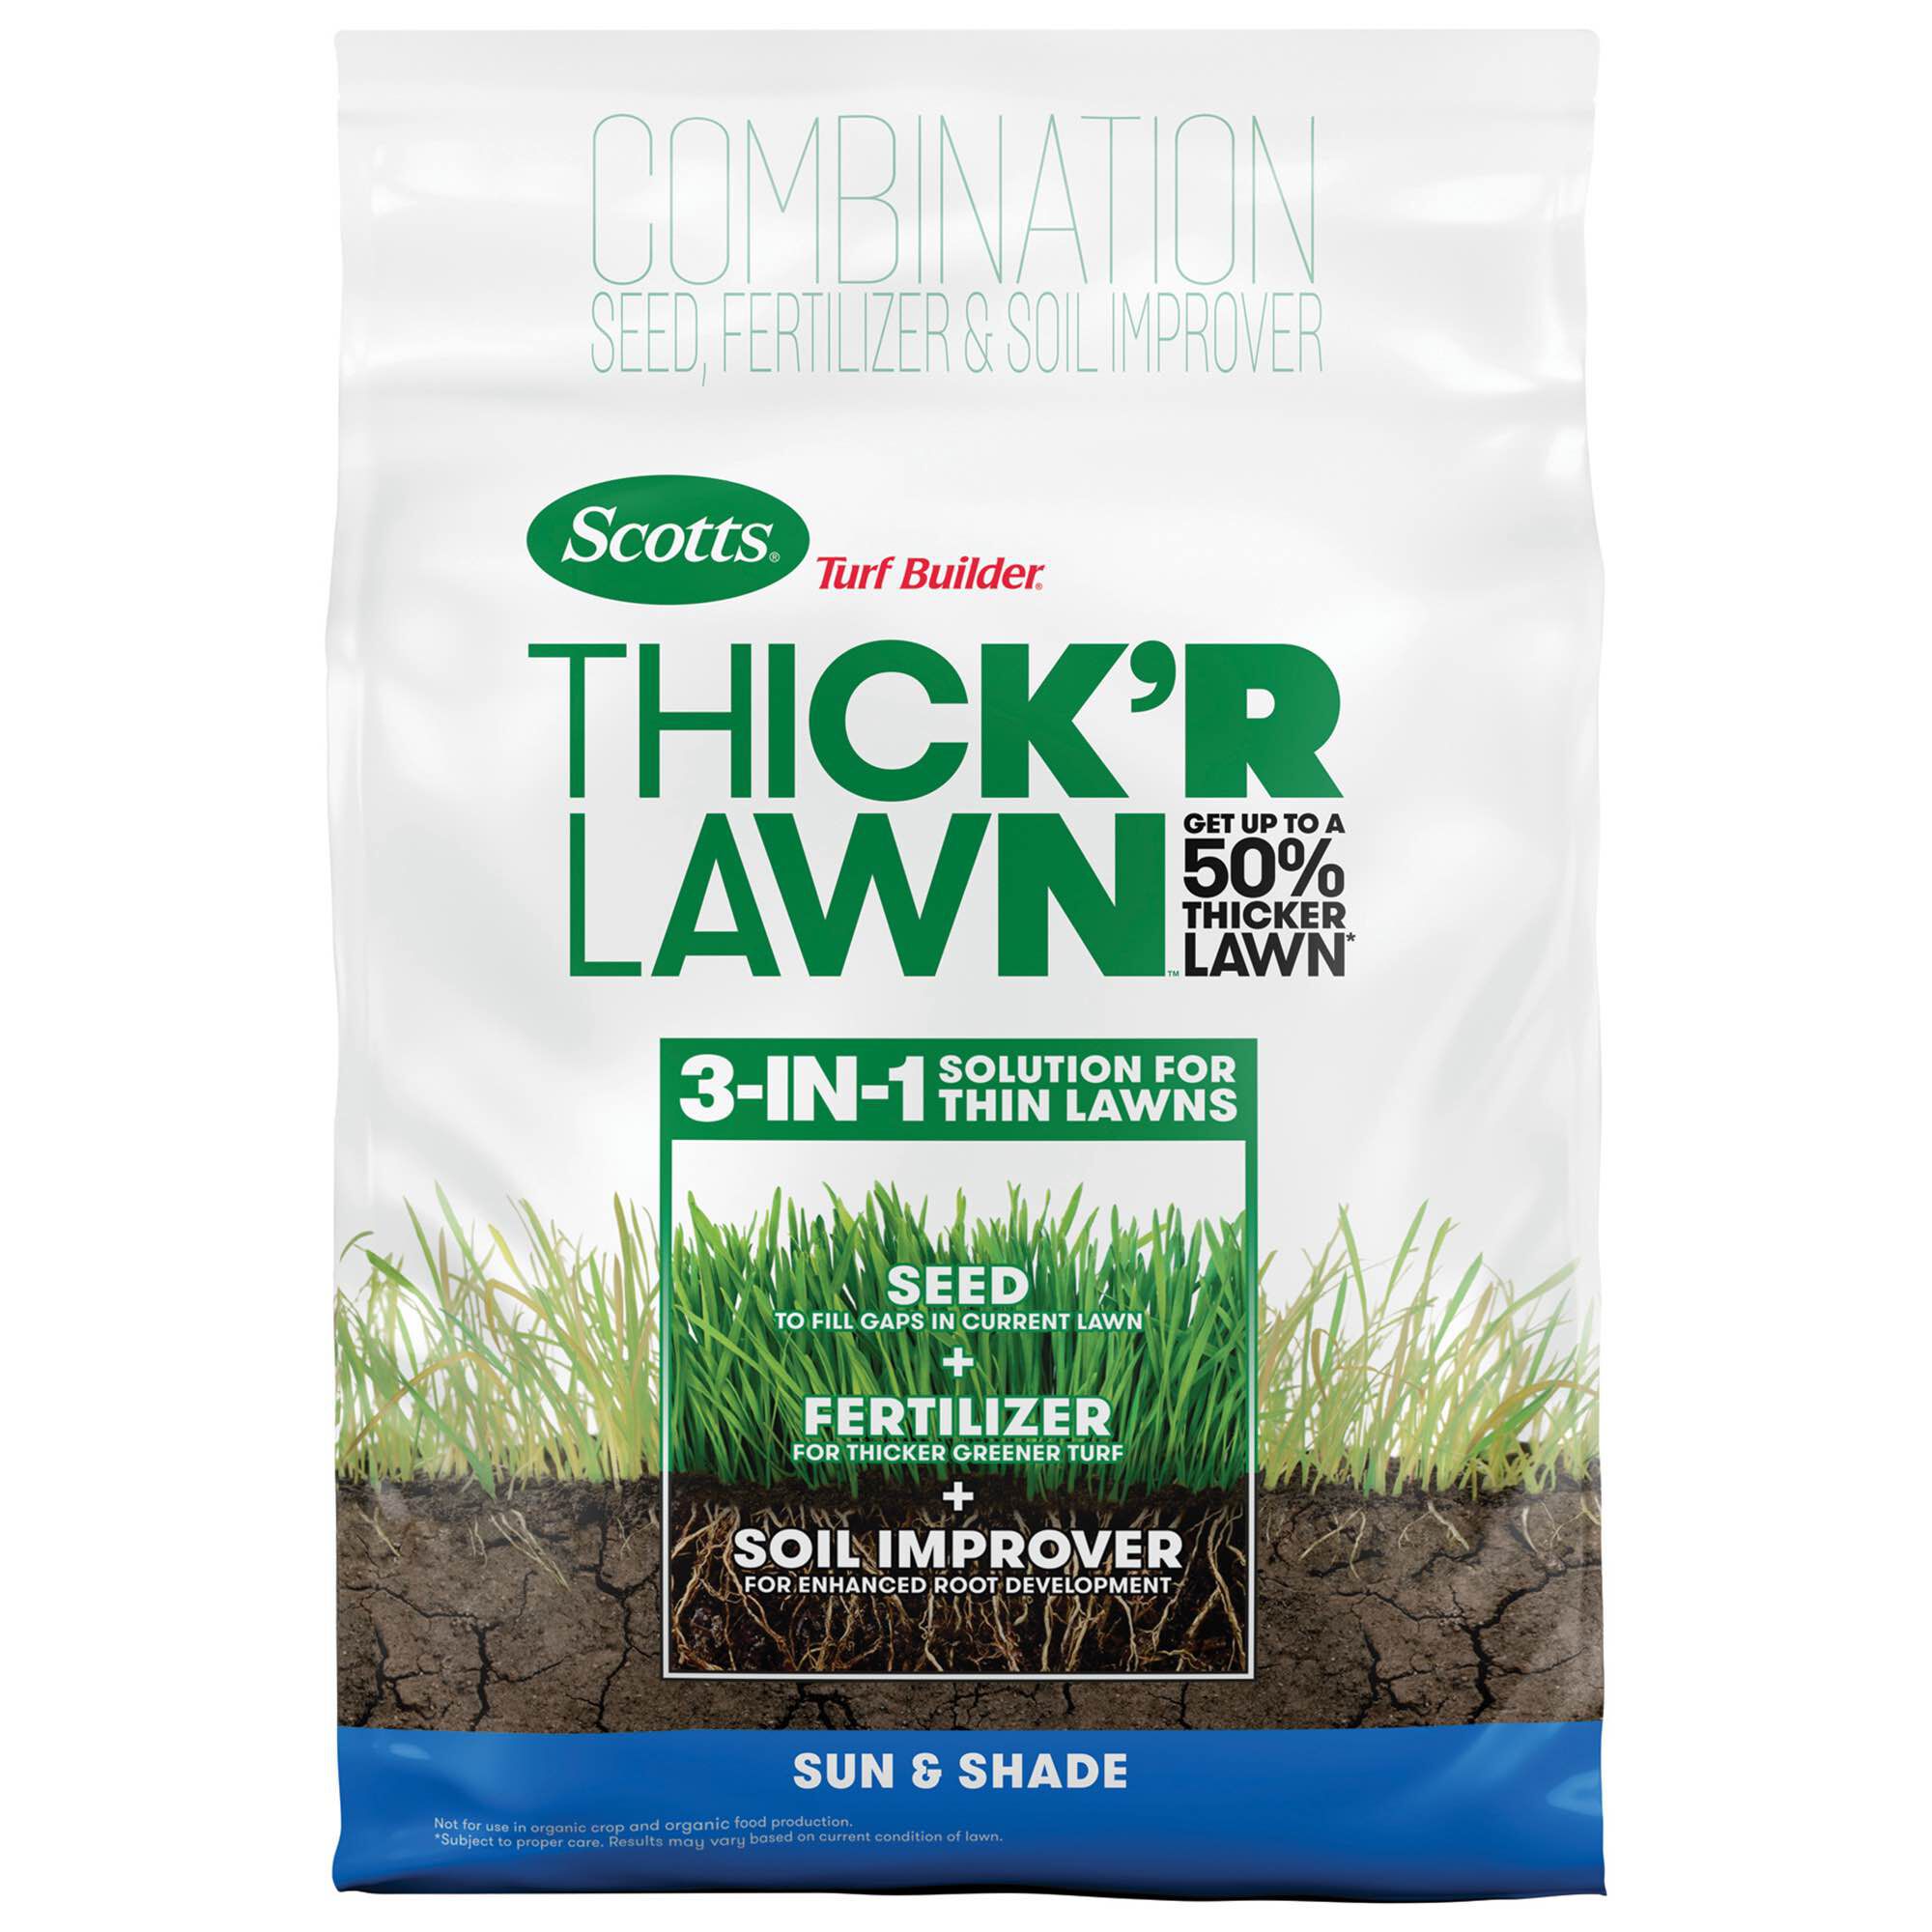 Image of Scotts Turf Builder Thick R Lawn fertilizer on Pinterest